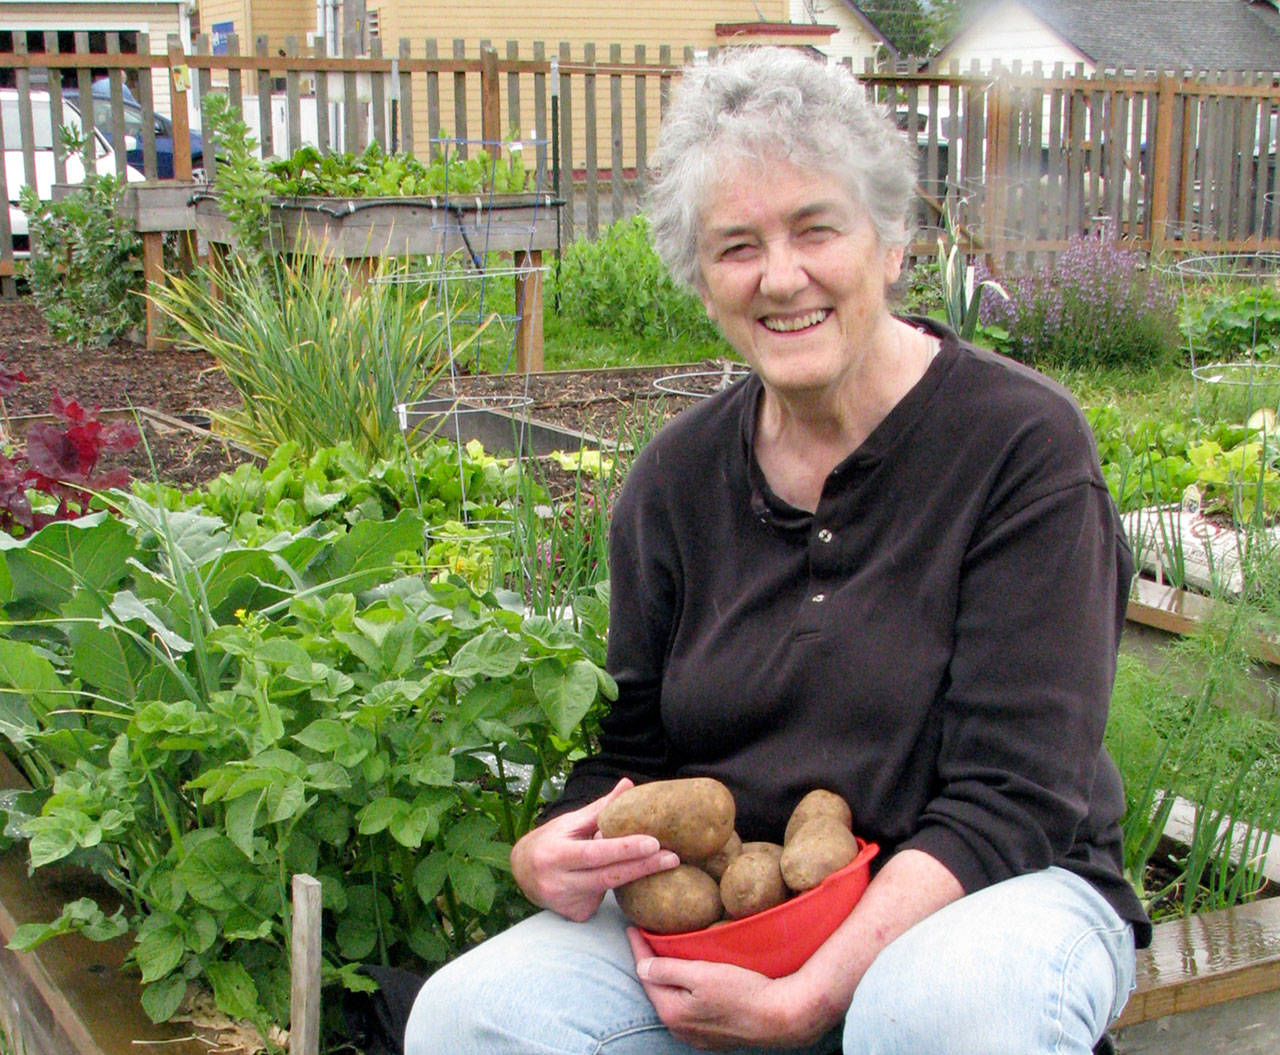 Master Gardener Muriel Nesbitt will discuss growing potatoes from seed on Thursday. (Amanda Rosenberg)